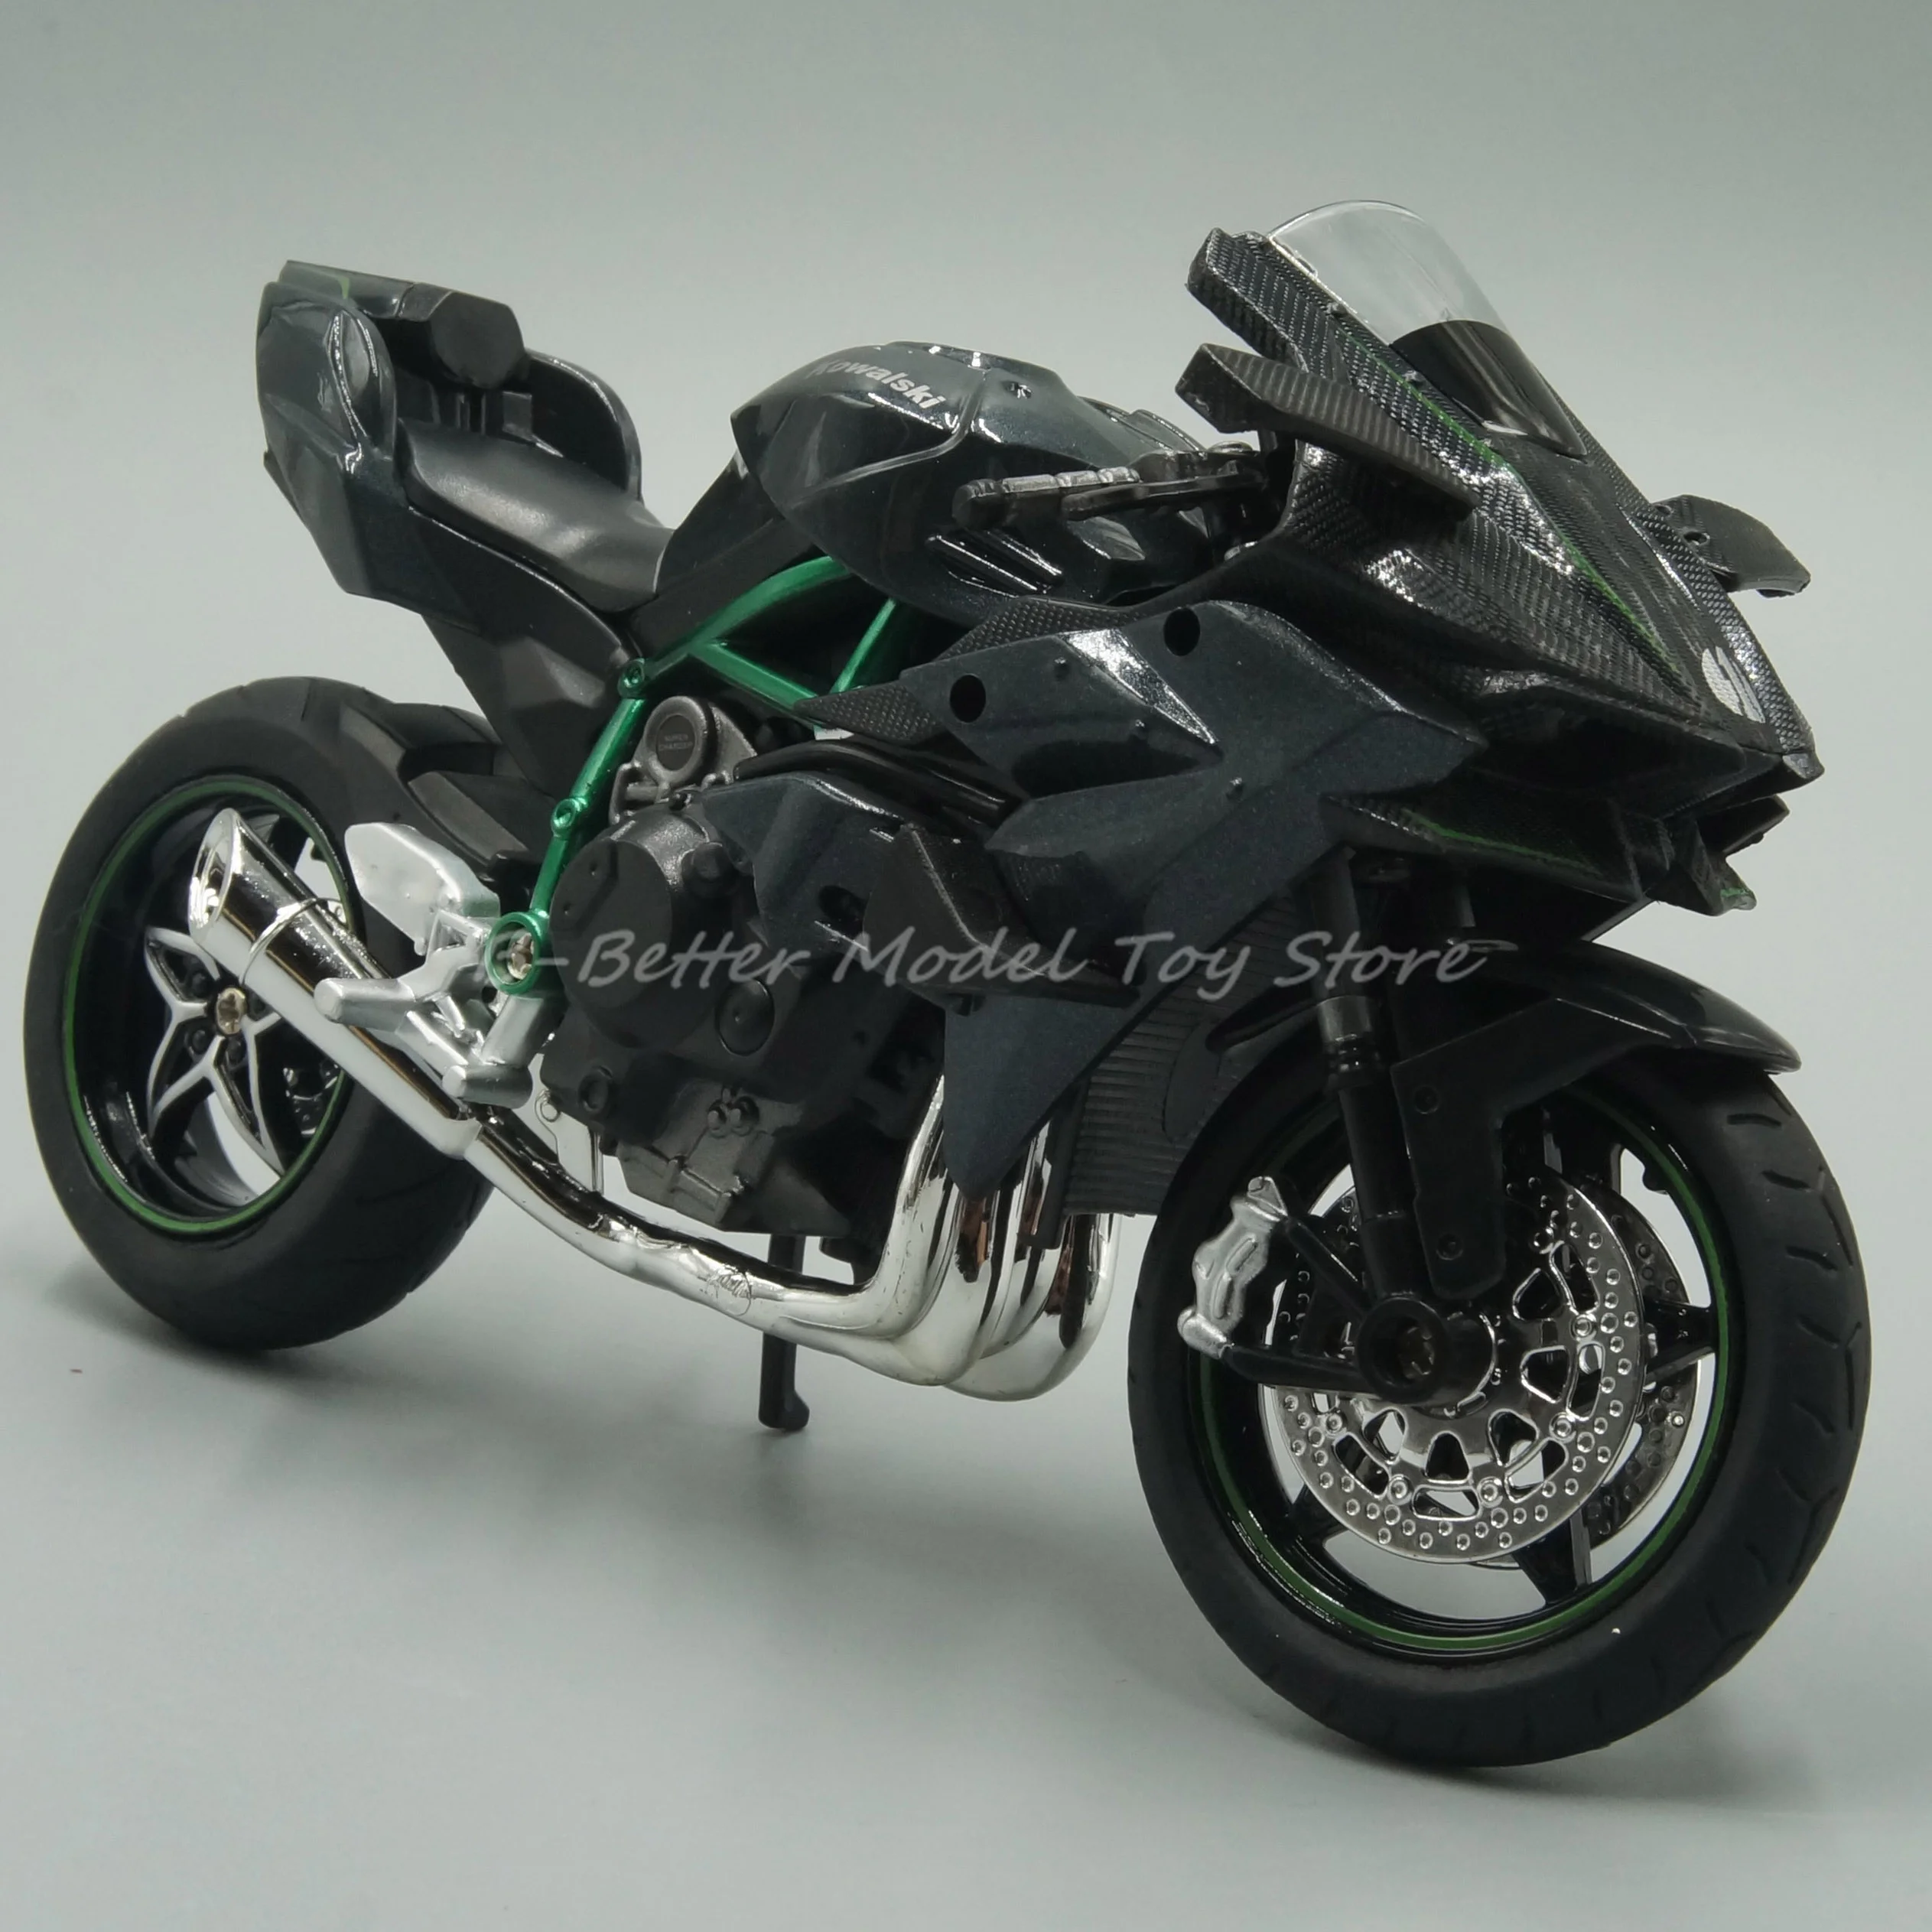 

1:12 Diecast Motorcycle Model Toy Ninja H2 Sport Bike Miniature Replica with Sound & Light